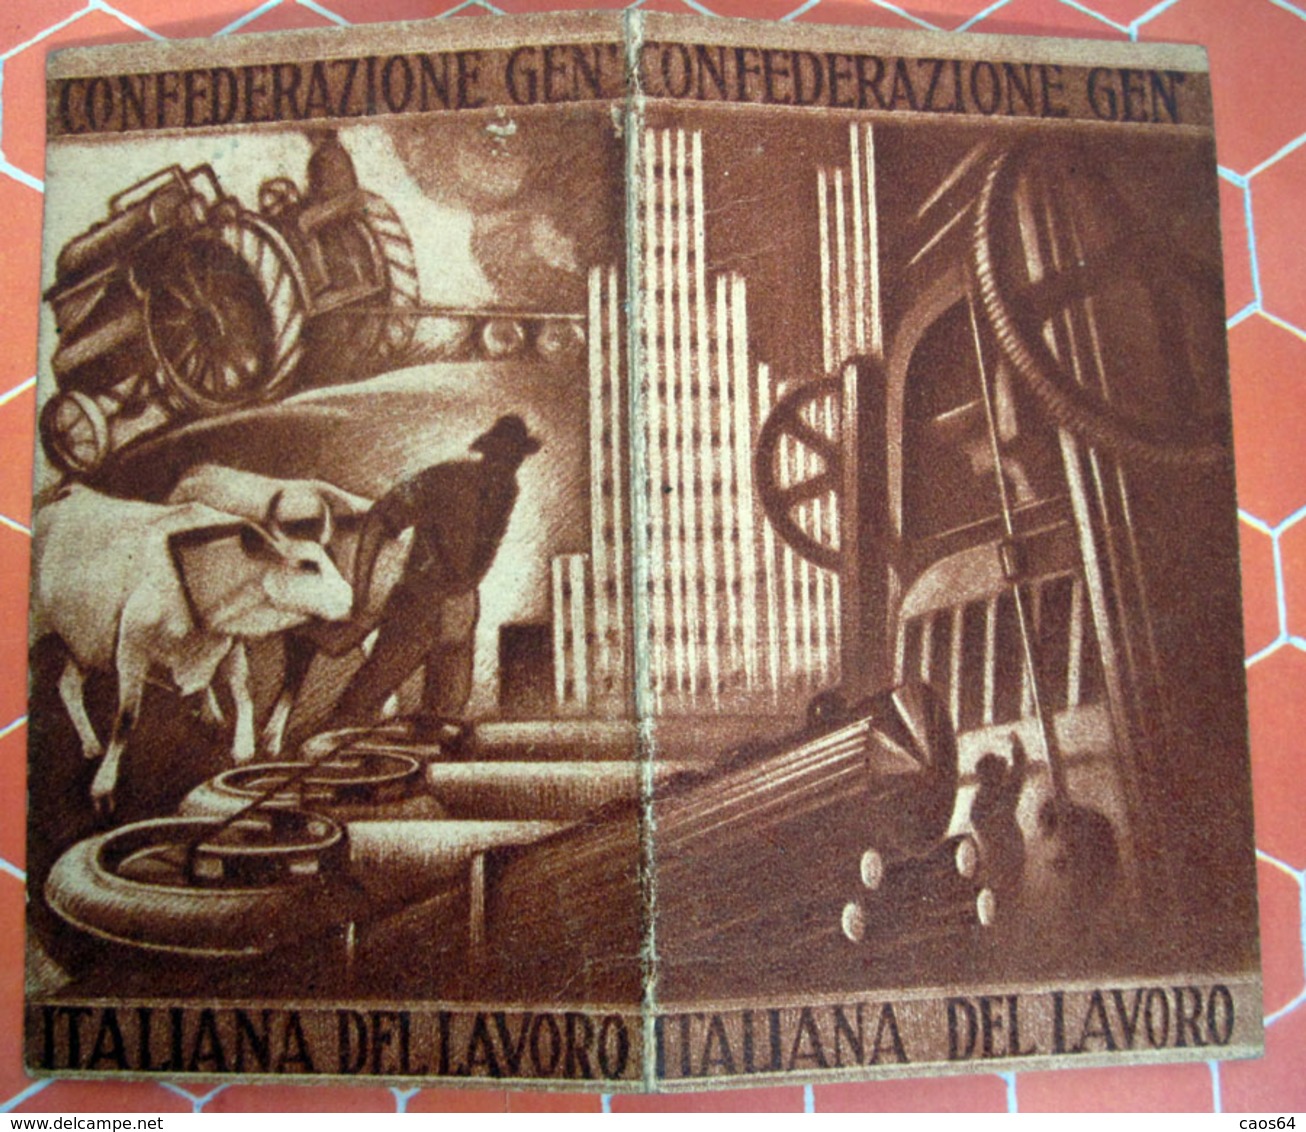 TESSERA PROVVISORIA CGIL 1945 FERROTRAMVIERI TORINO E PROVINCIA - Membership Cards